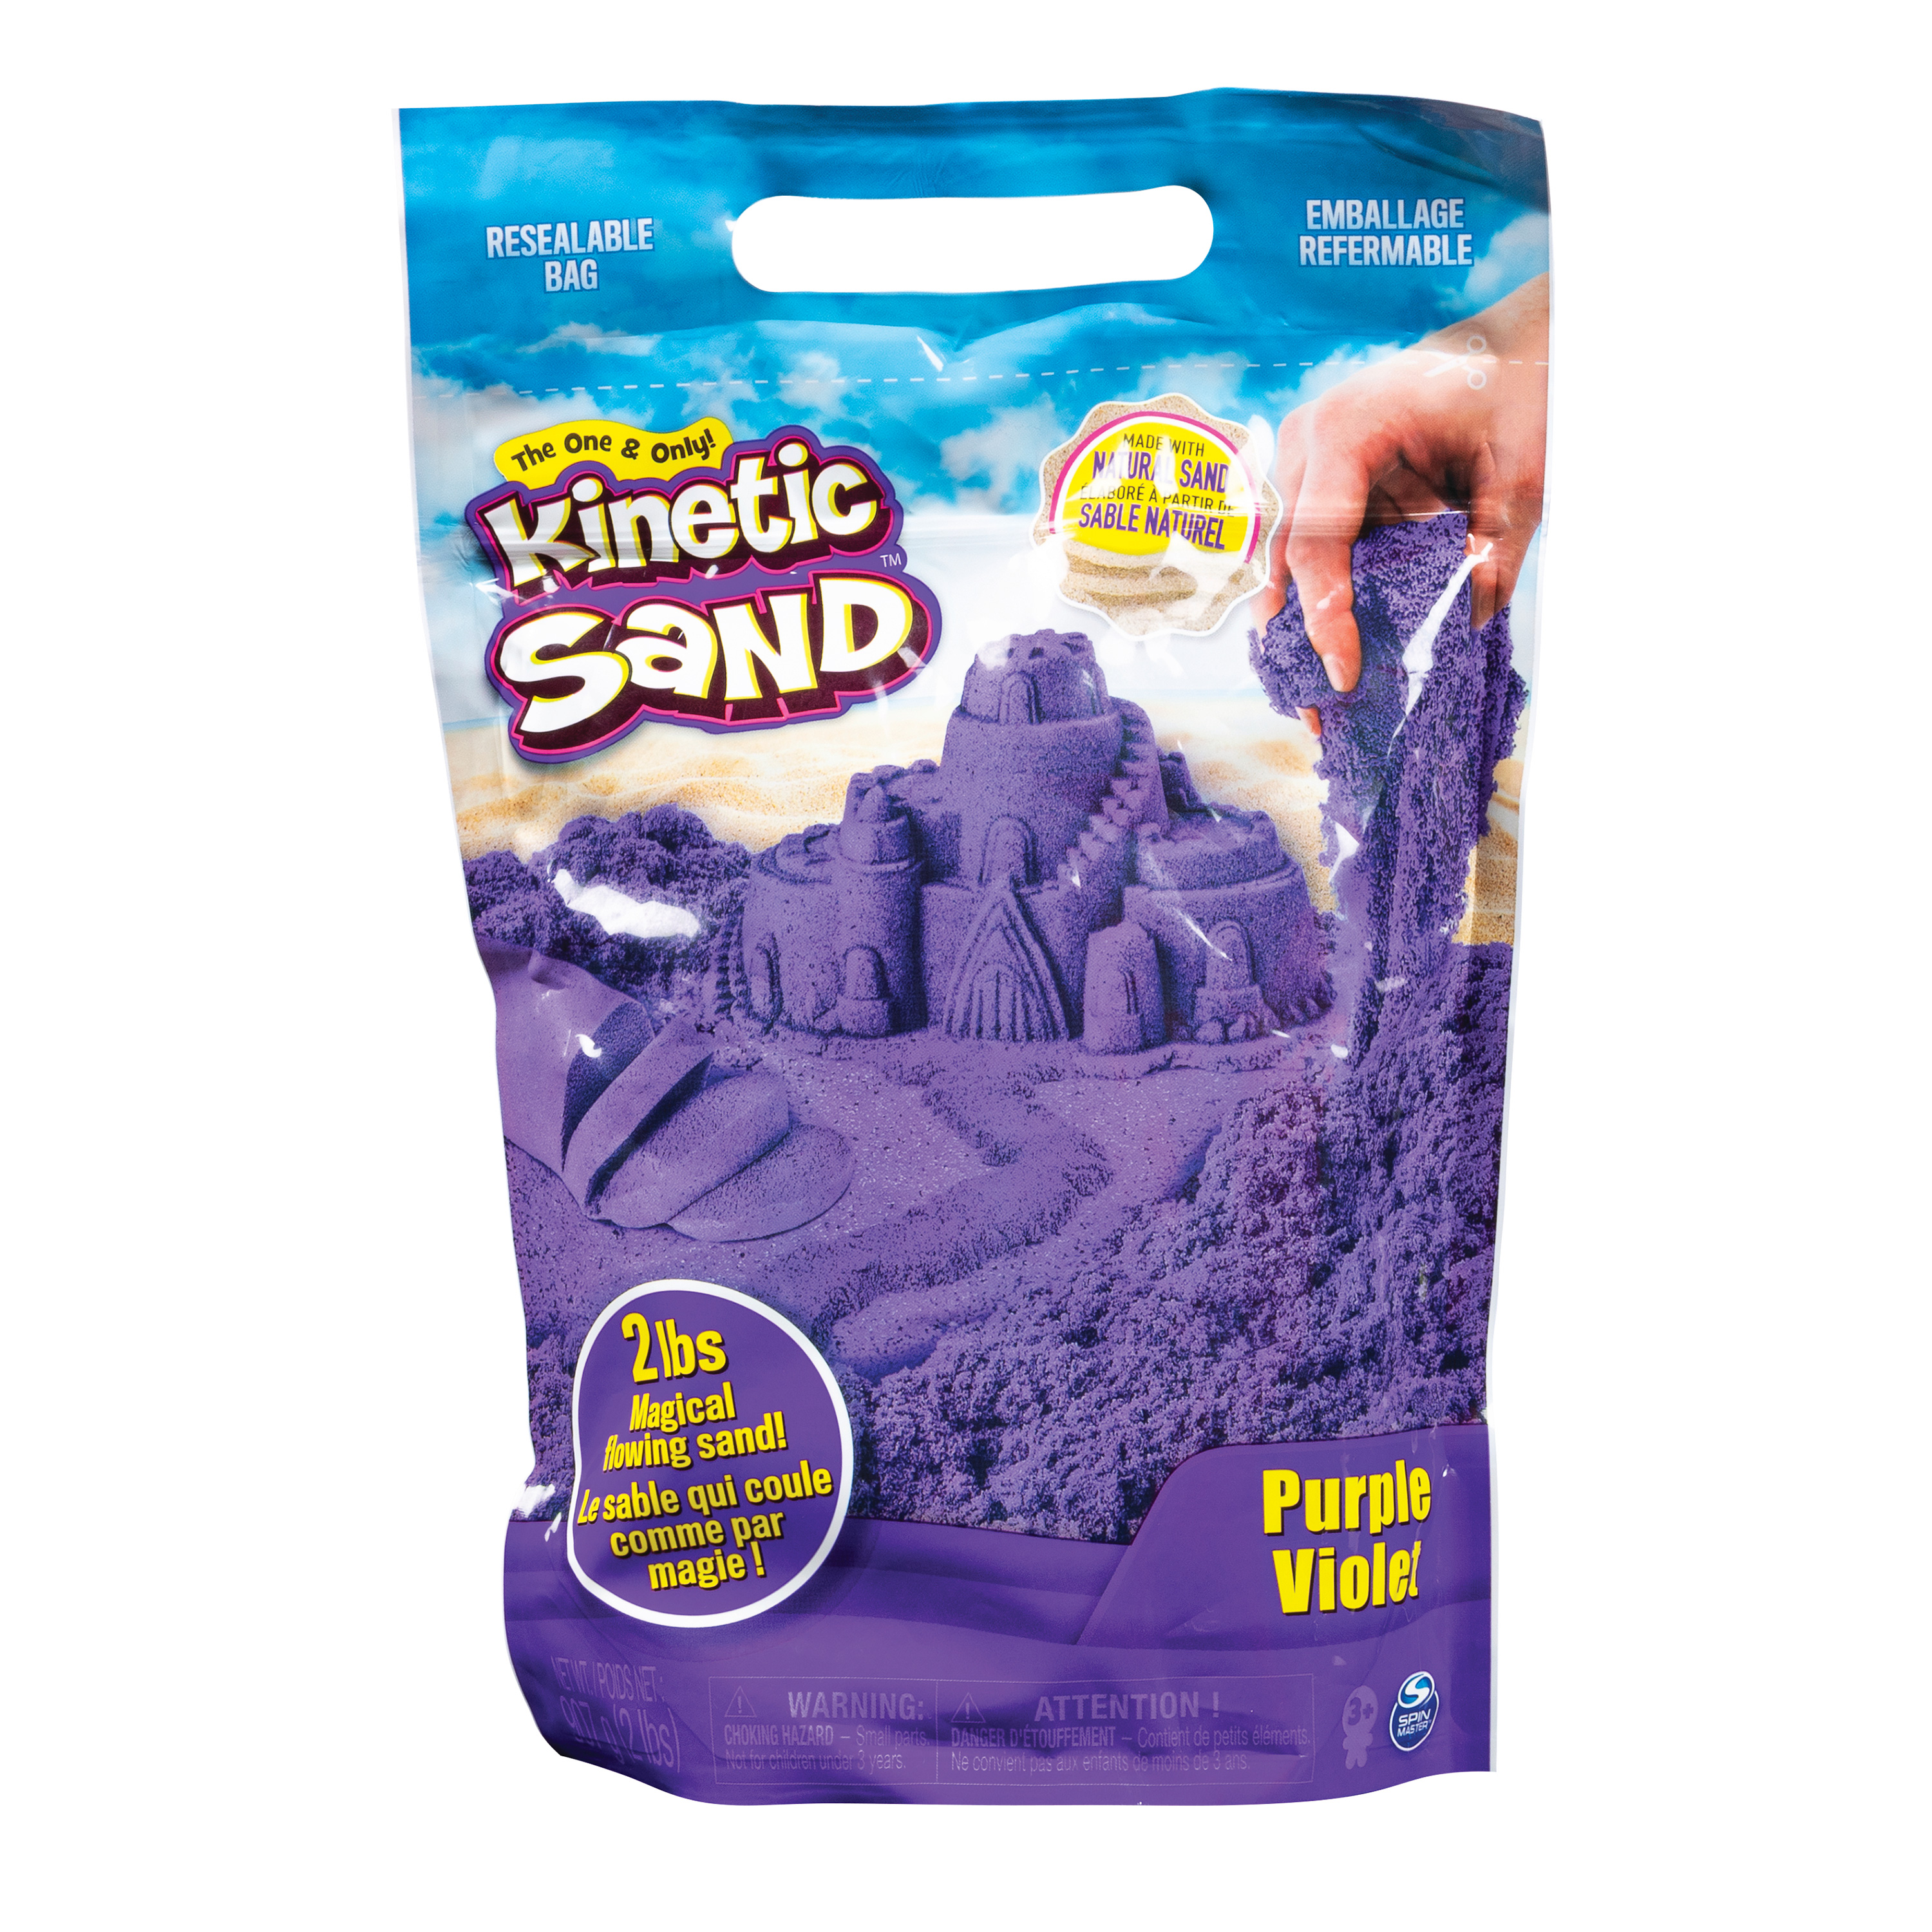 Kinetic Sand 'Color - lila', 0,9 kg Beutel